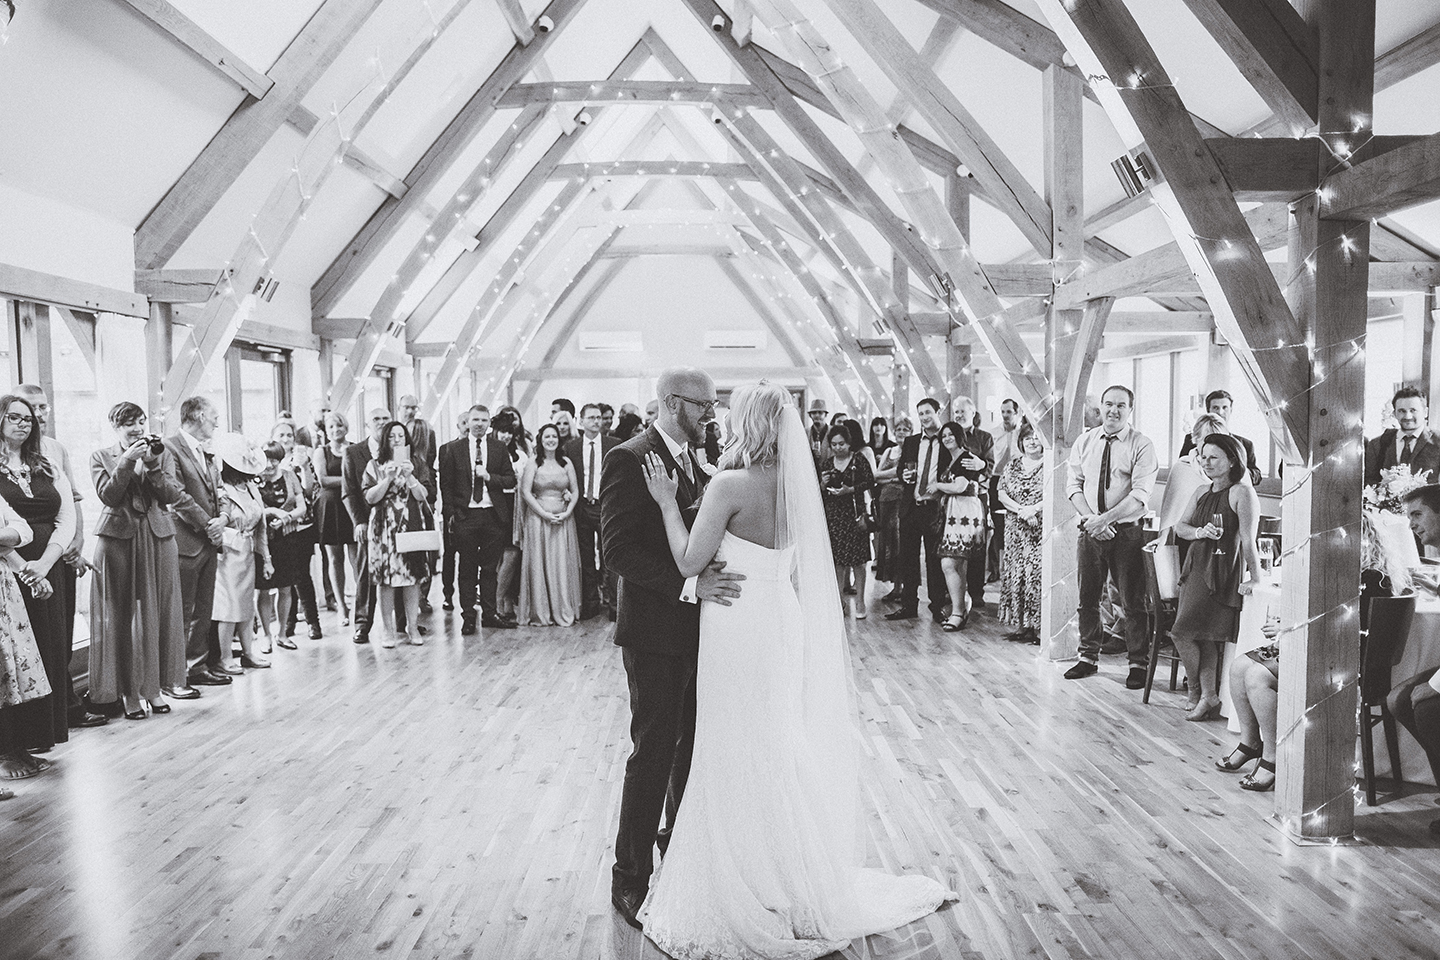 The newlyweds enjoy their first dance in the Bridge Barn at this Cambridgeshire barn wedding venue